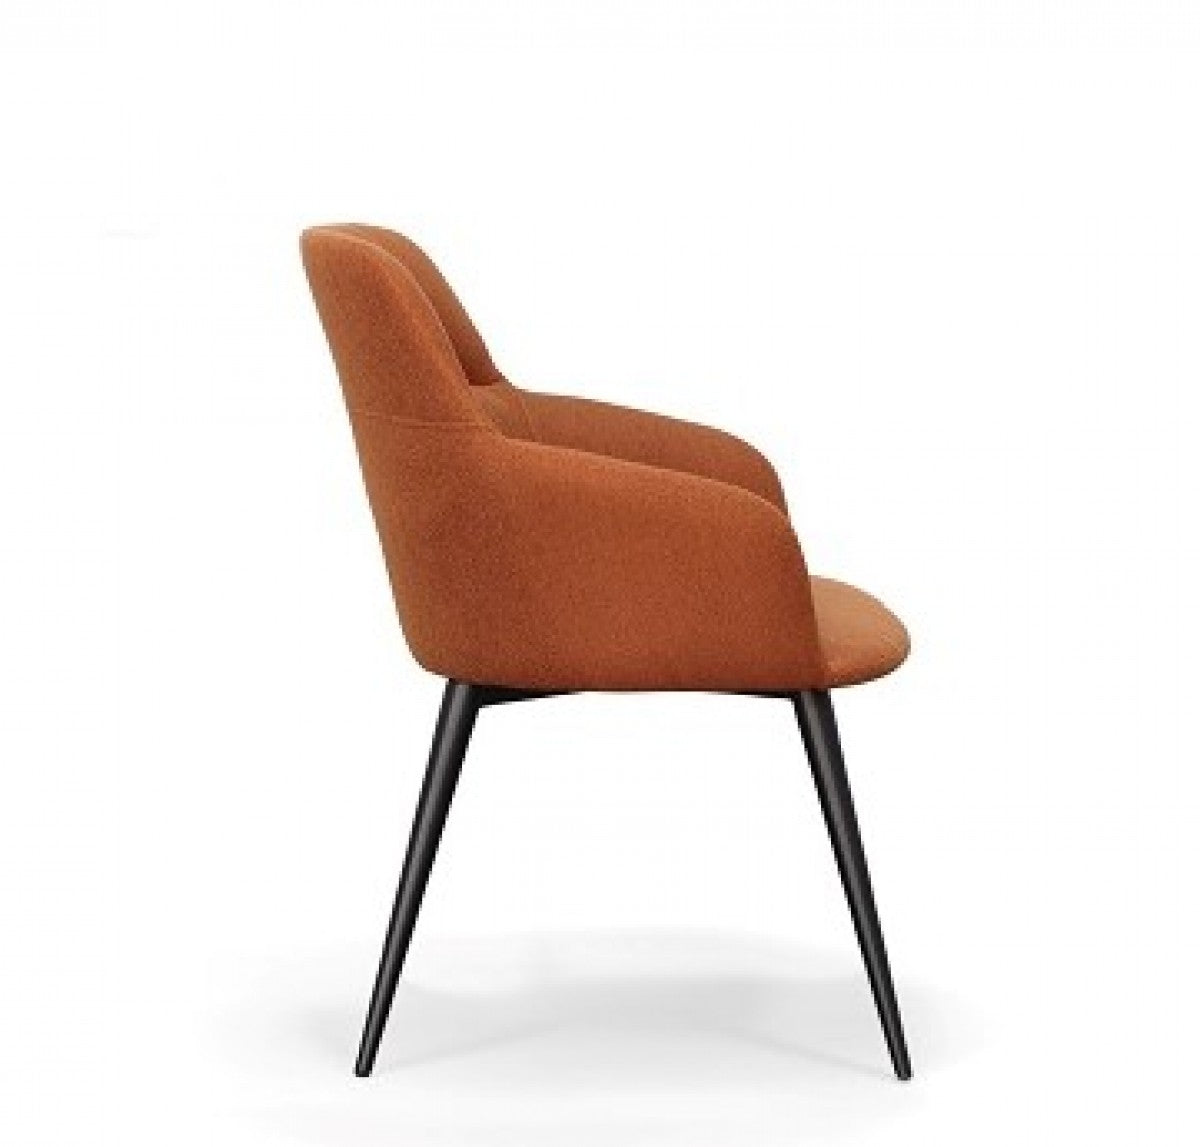 Modrest Scranton - Modern Orange & Black Dining Chair